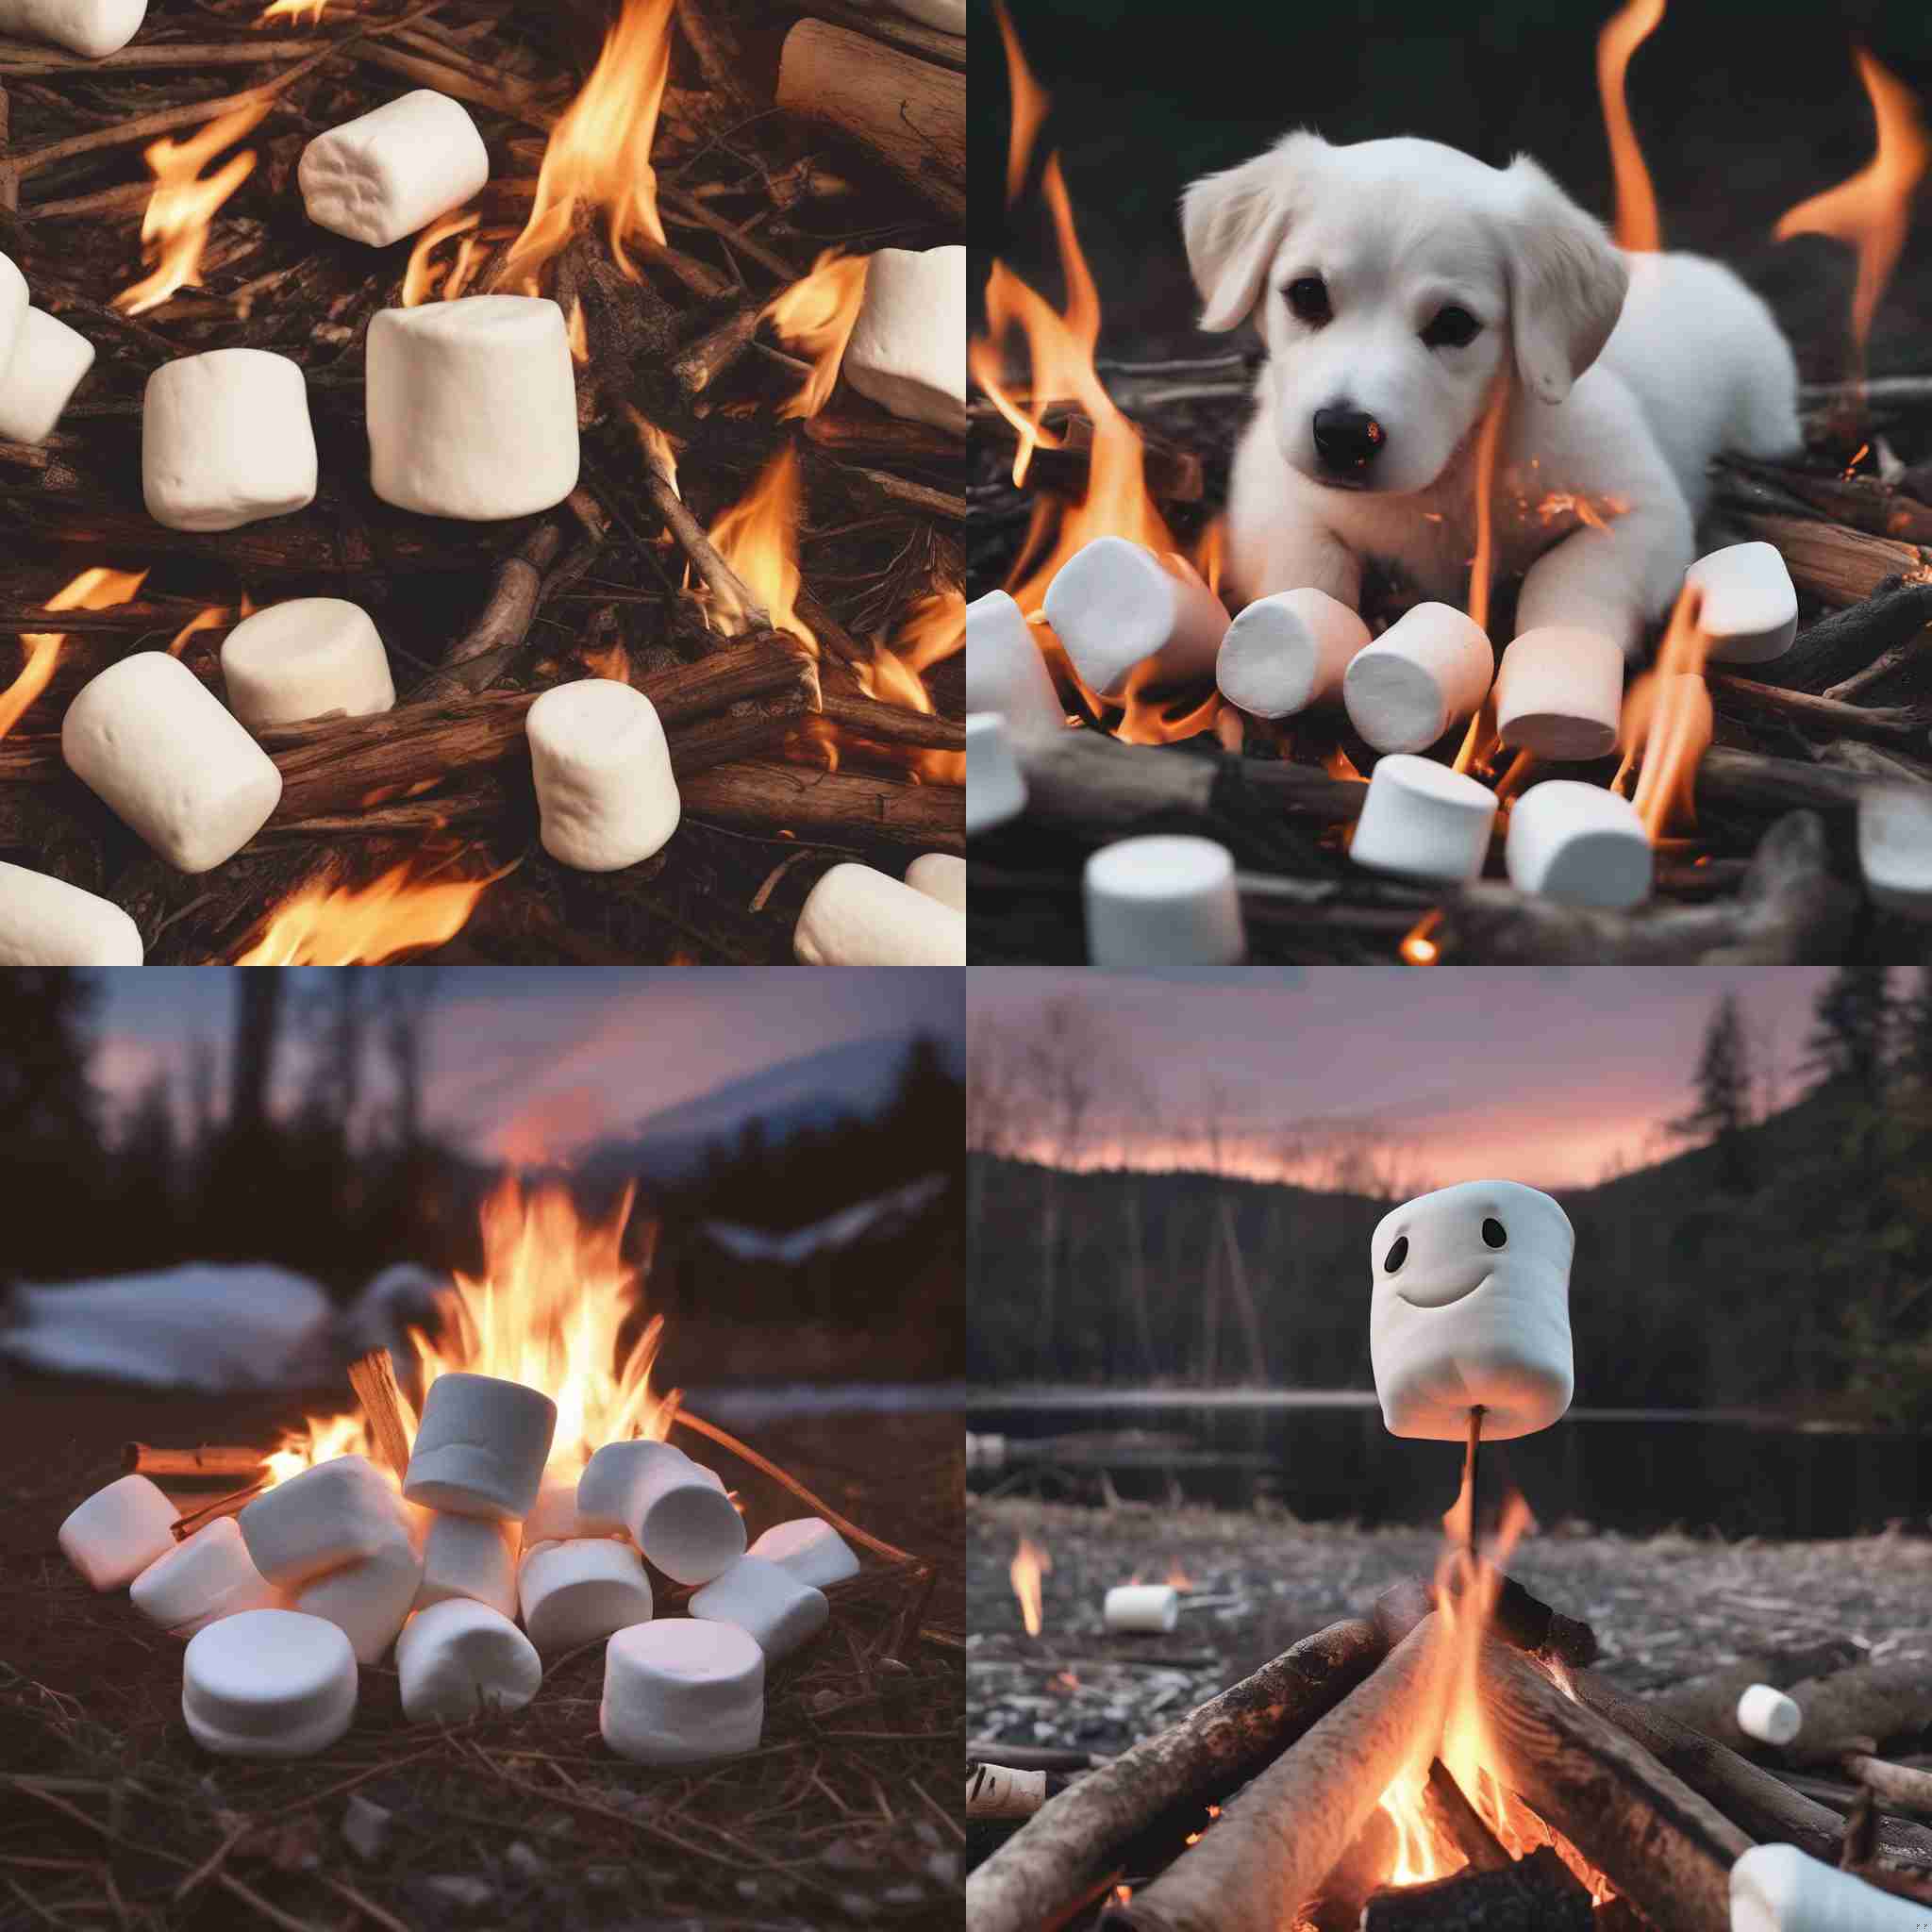 Marshmallow over a bonfire